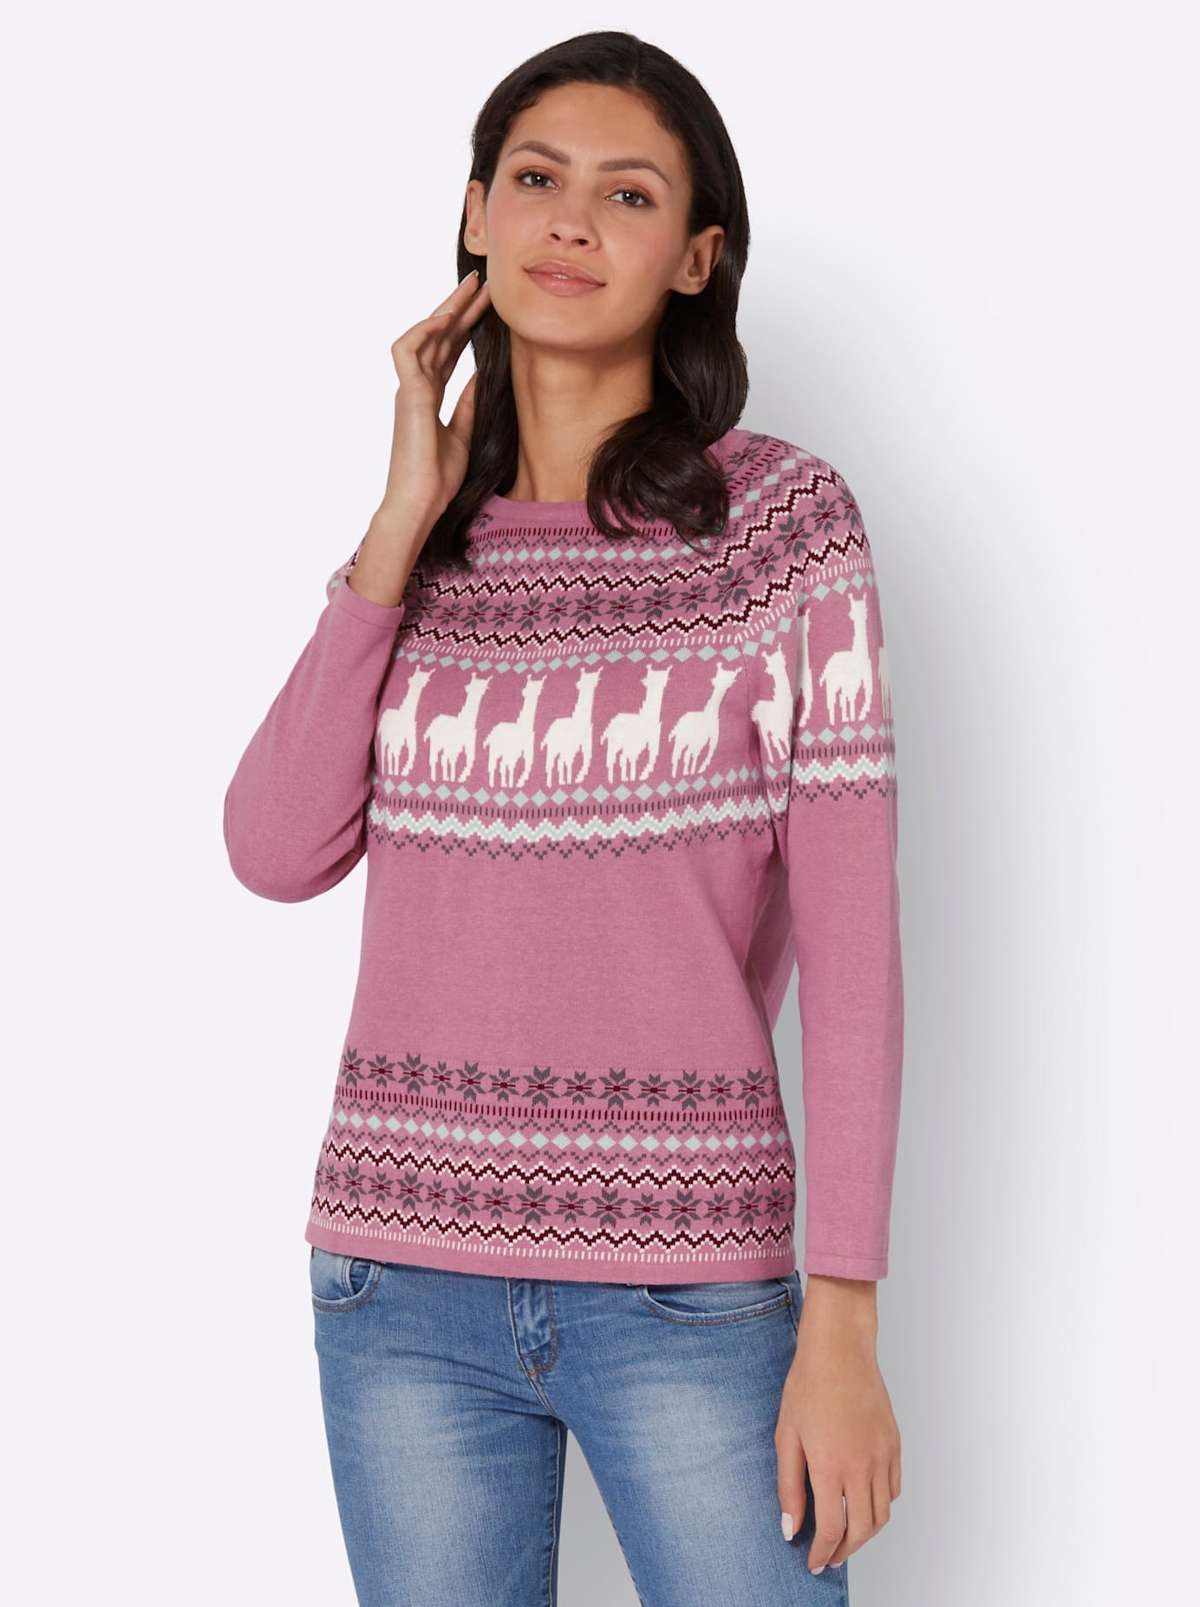 Норвежский свитер